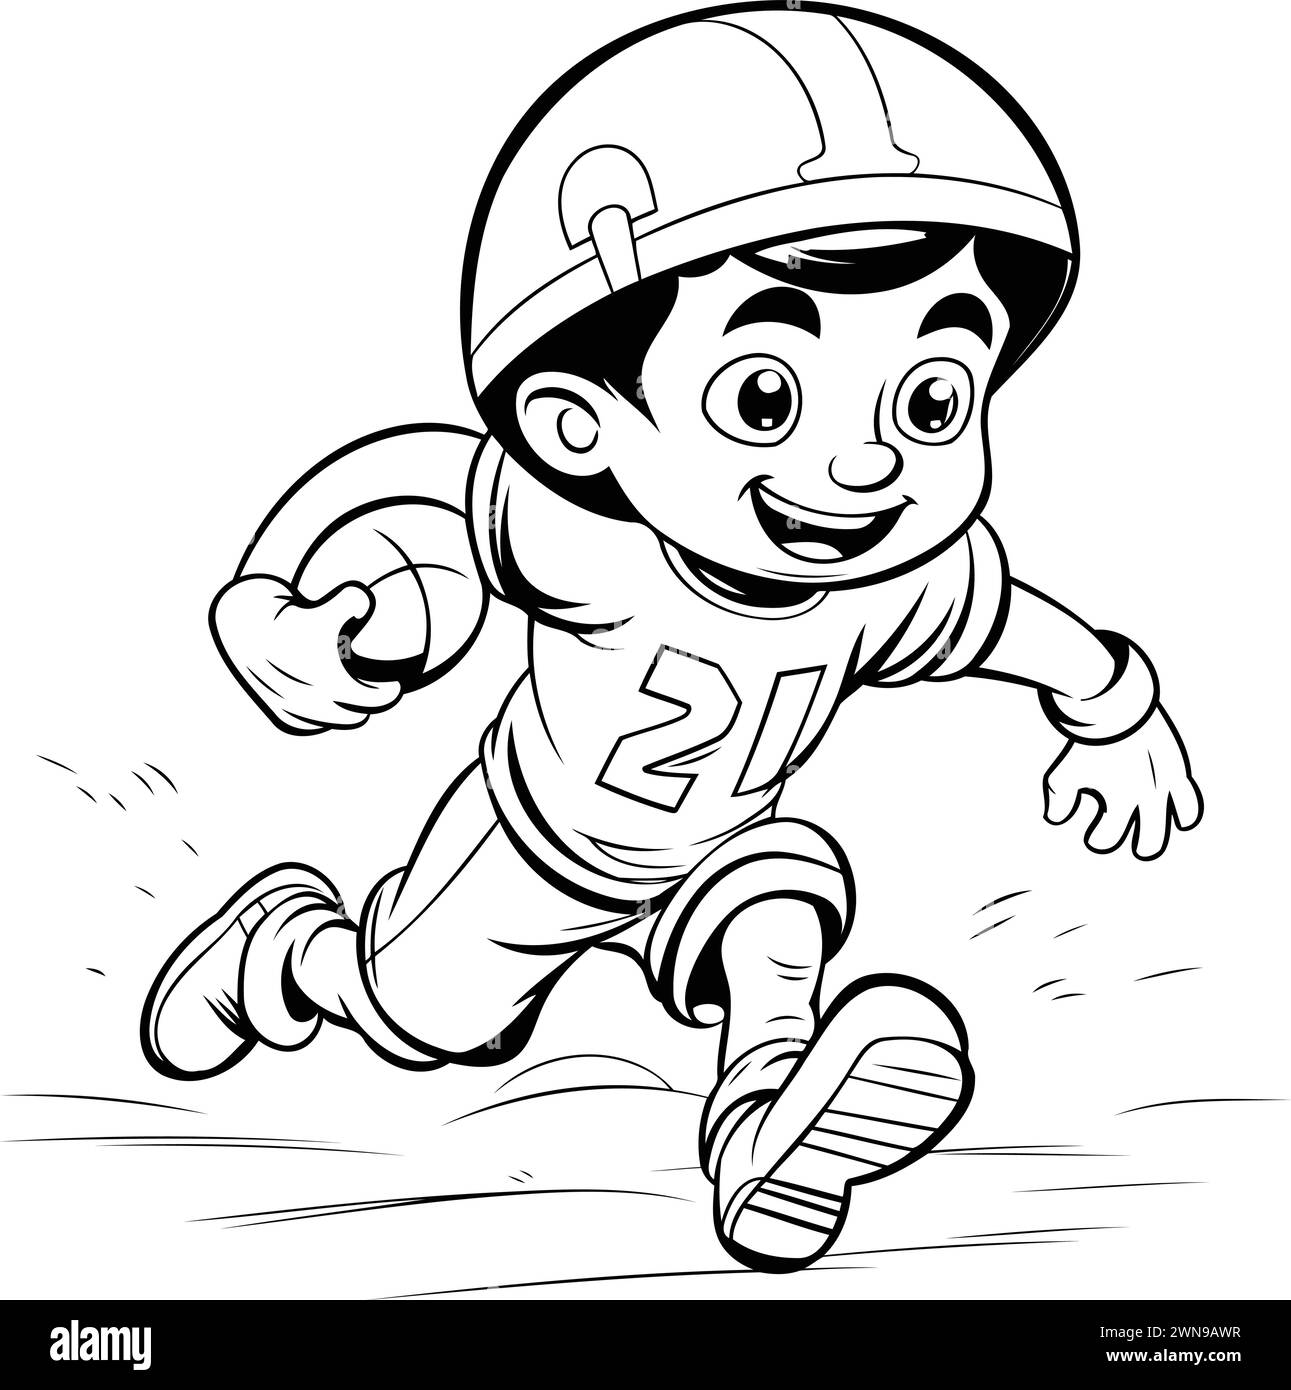 Football Player Running - Black and White Cartoon Illustration. Clip Art Stock Vector